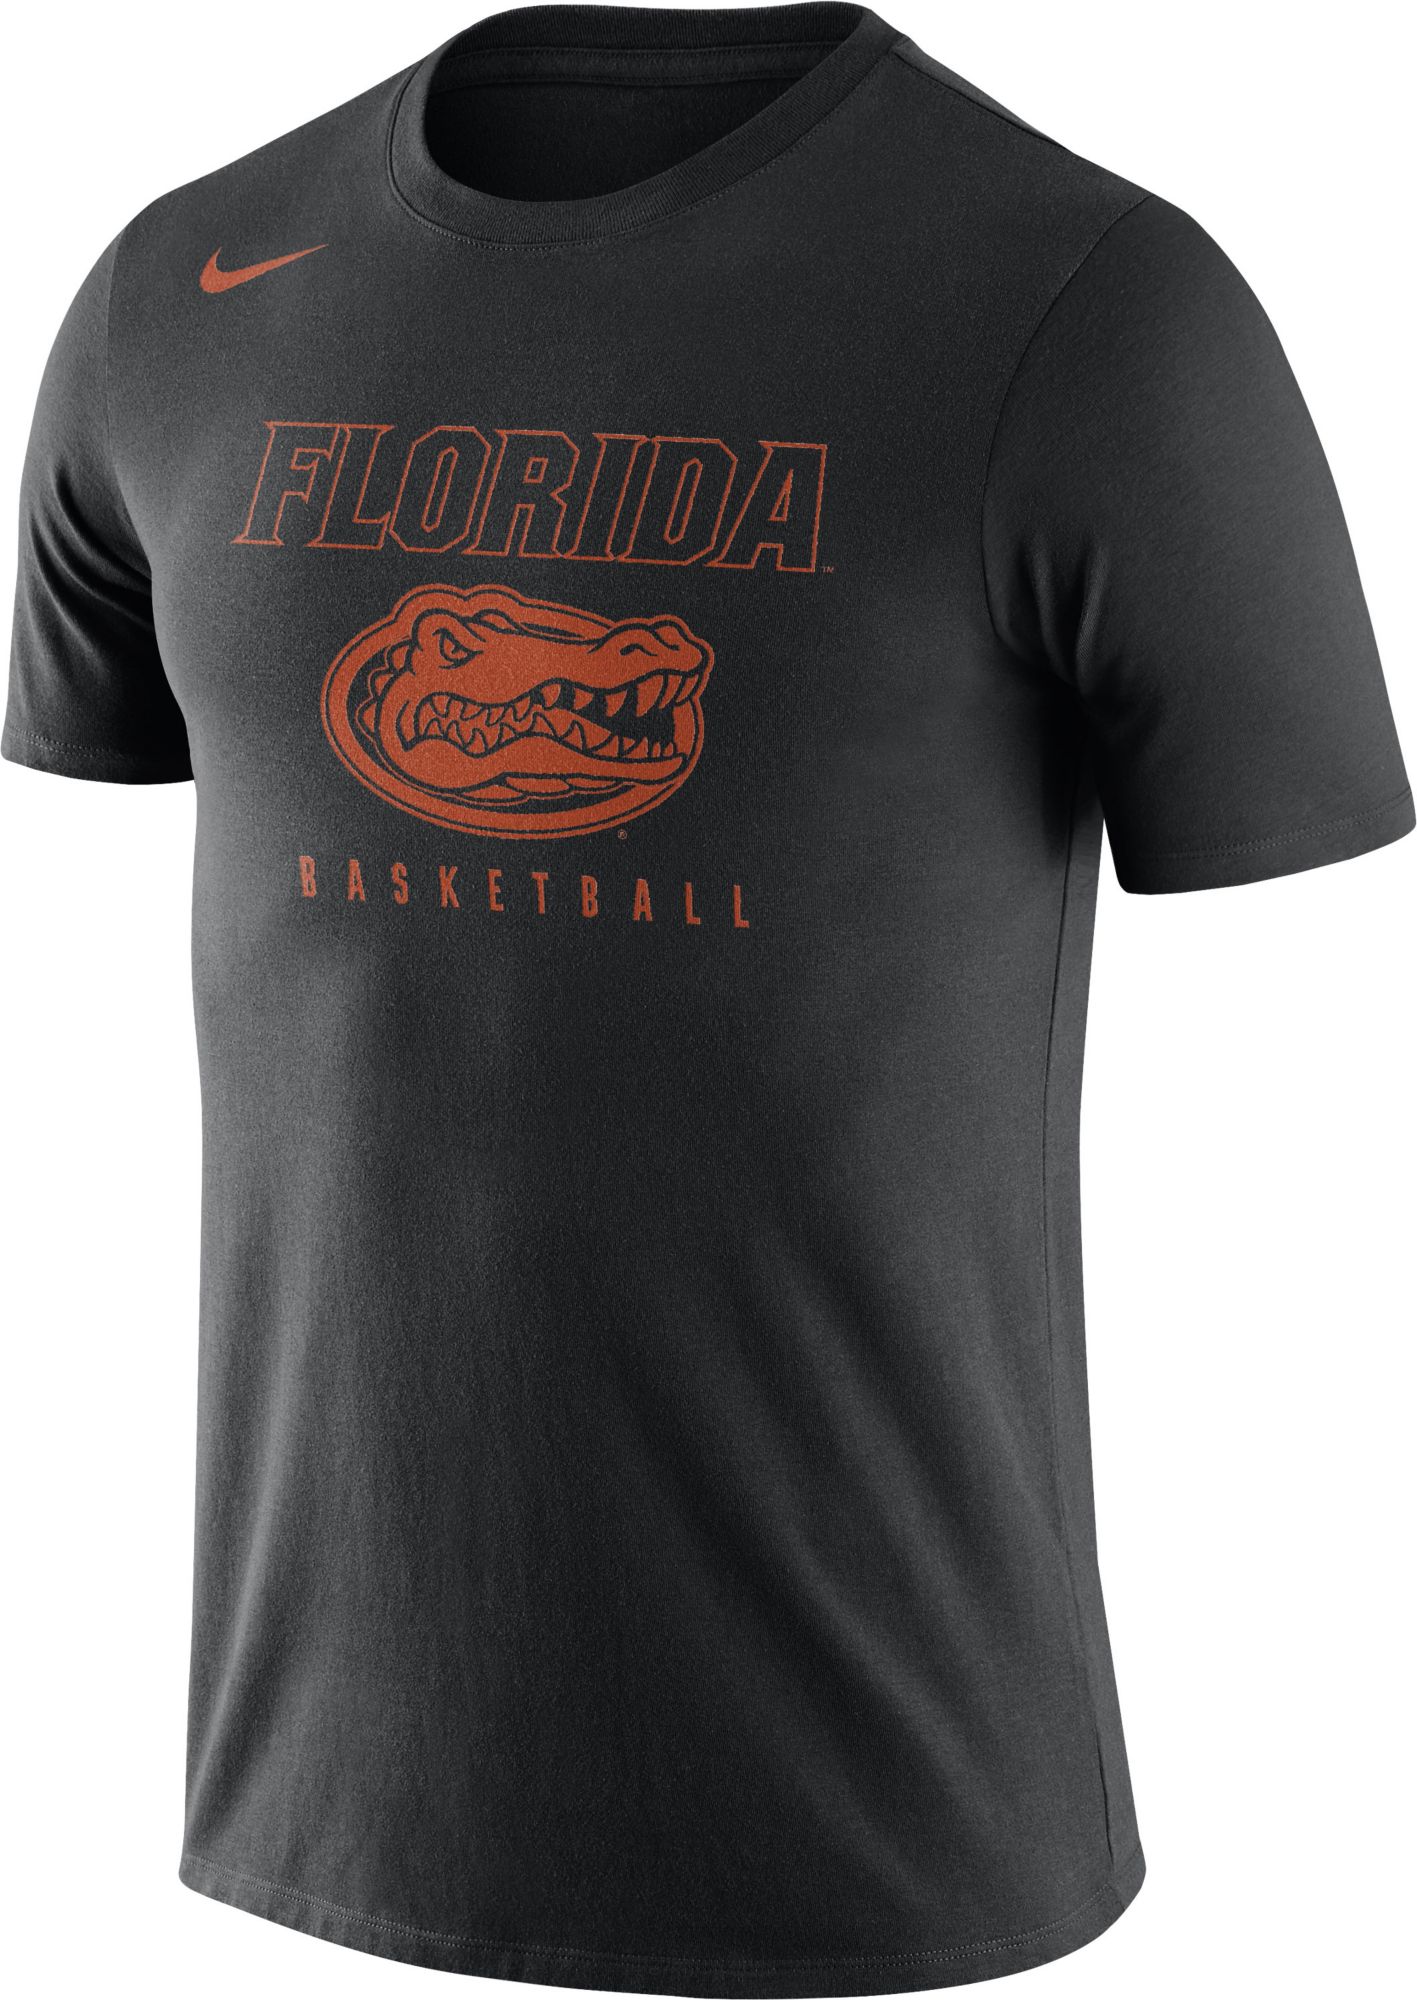 Florida Gators Basketball Gear | DICK'S Sporting Goods